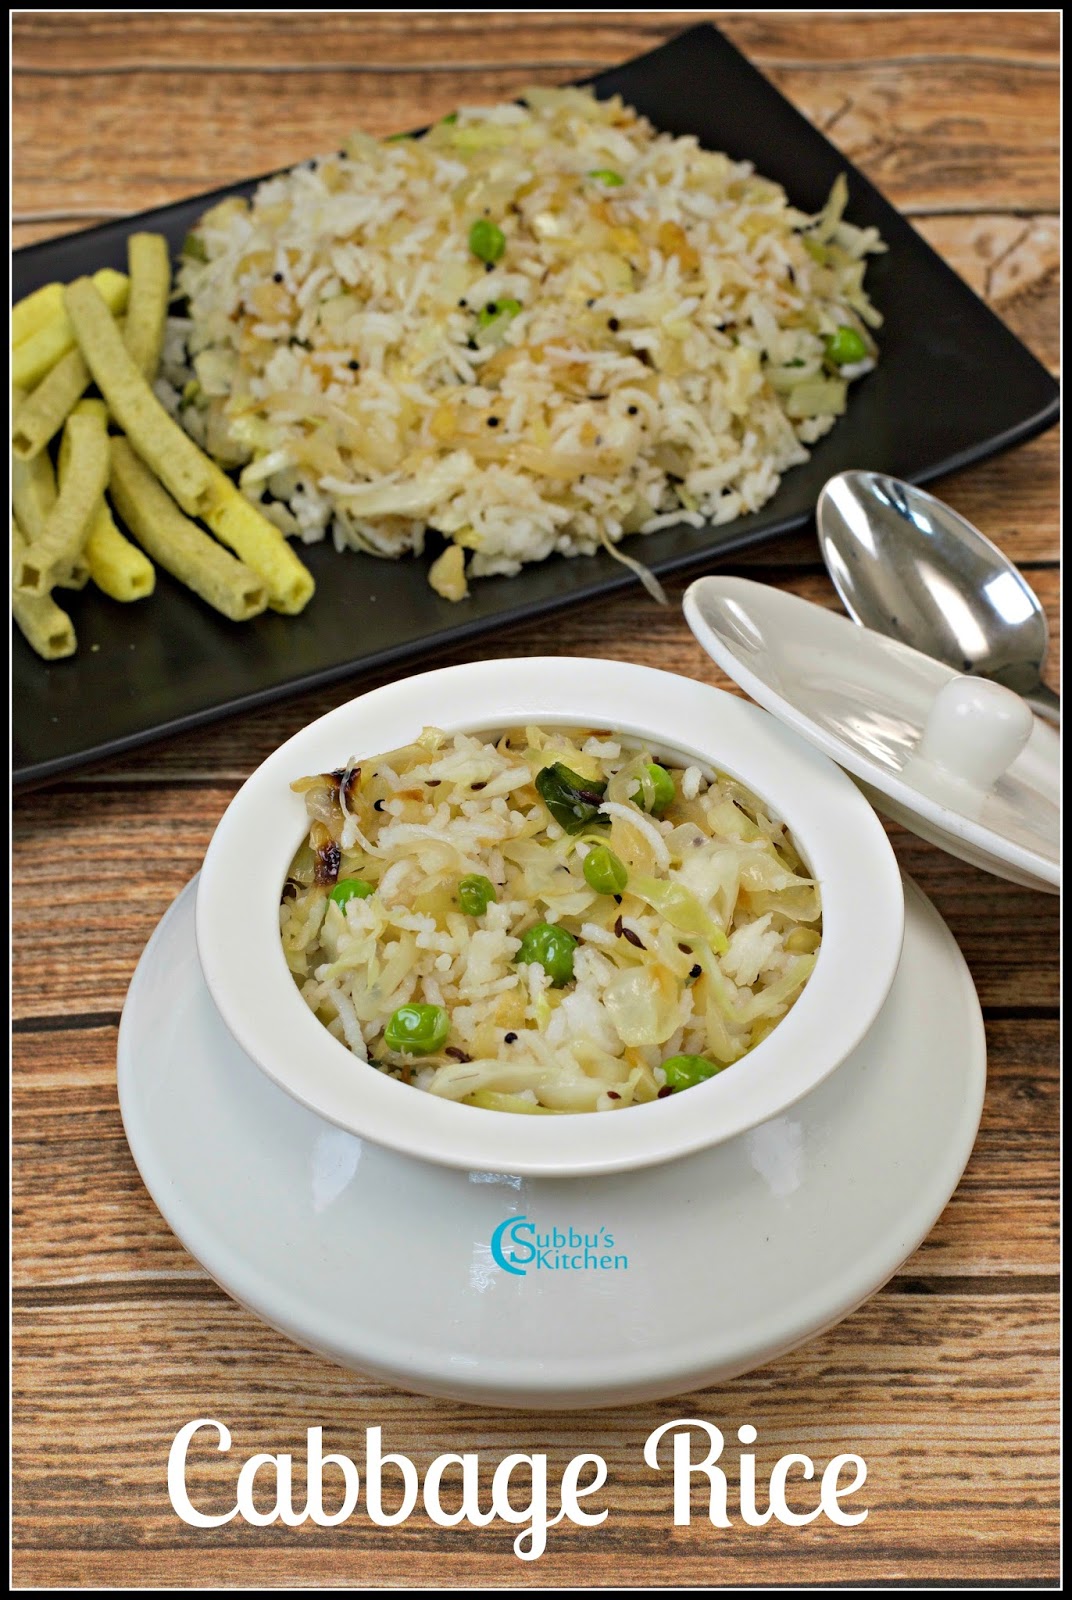 Cabbage Rice Recipe | Kids Lunch Box Dishes - Subbus Kitchen